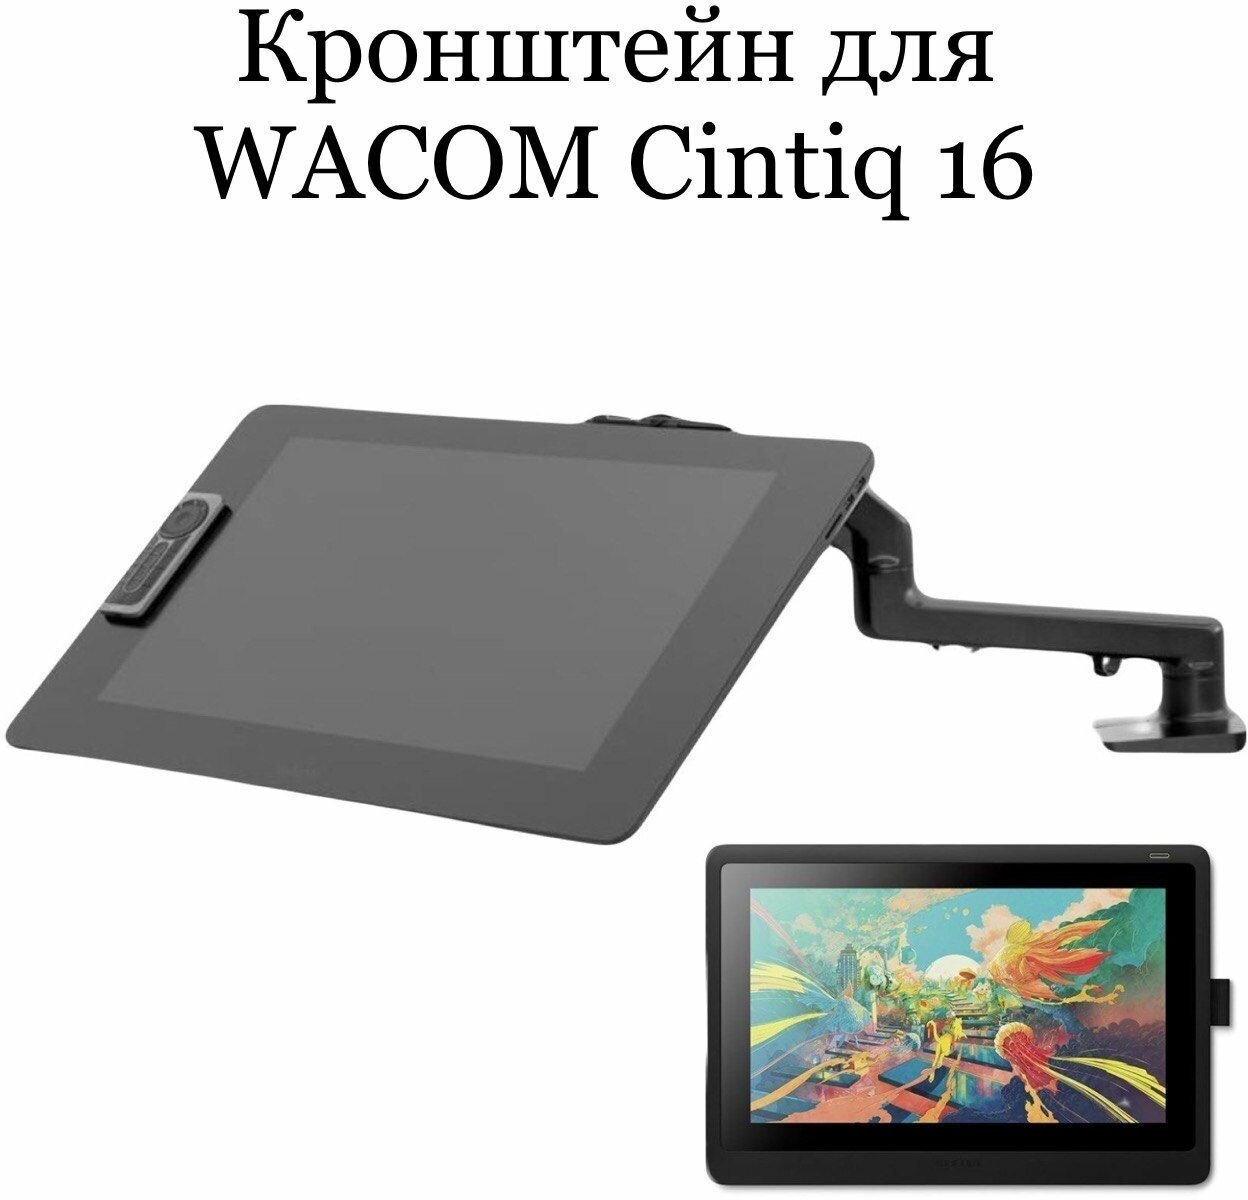 Кронштейн для Wacom Cintiq 16 (DTK-1660)